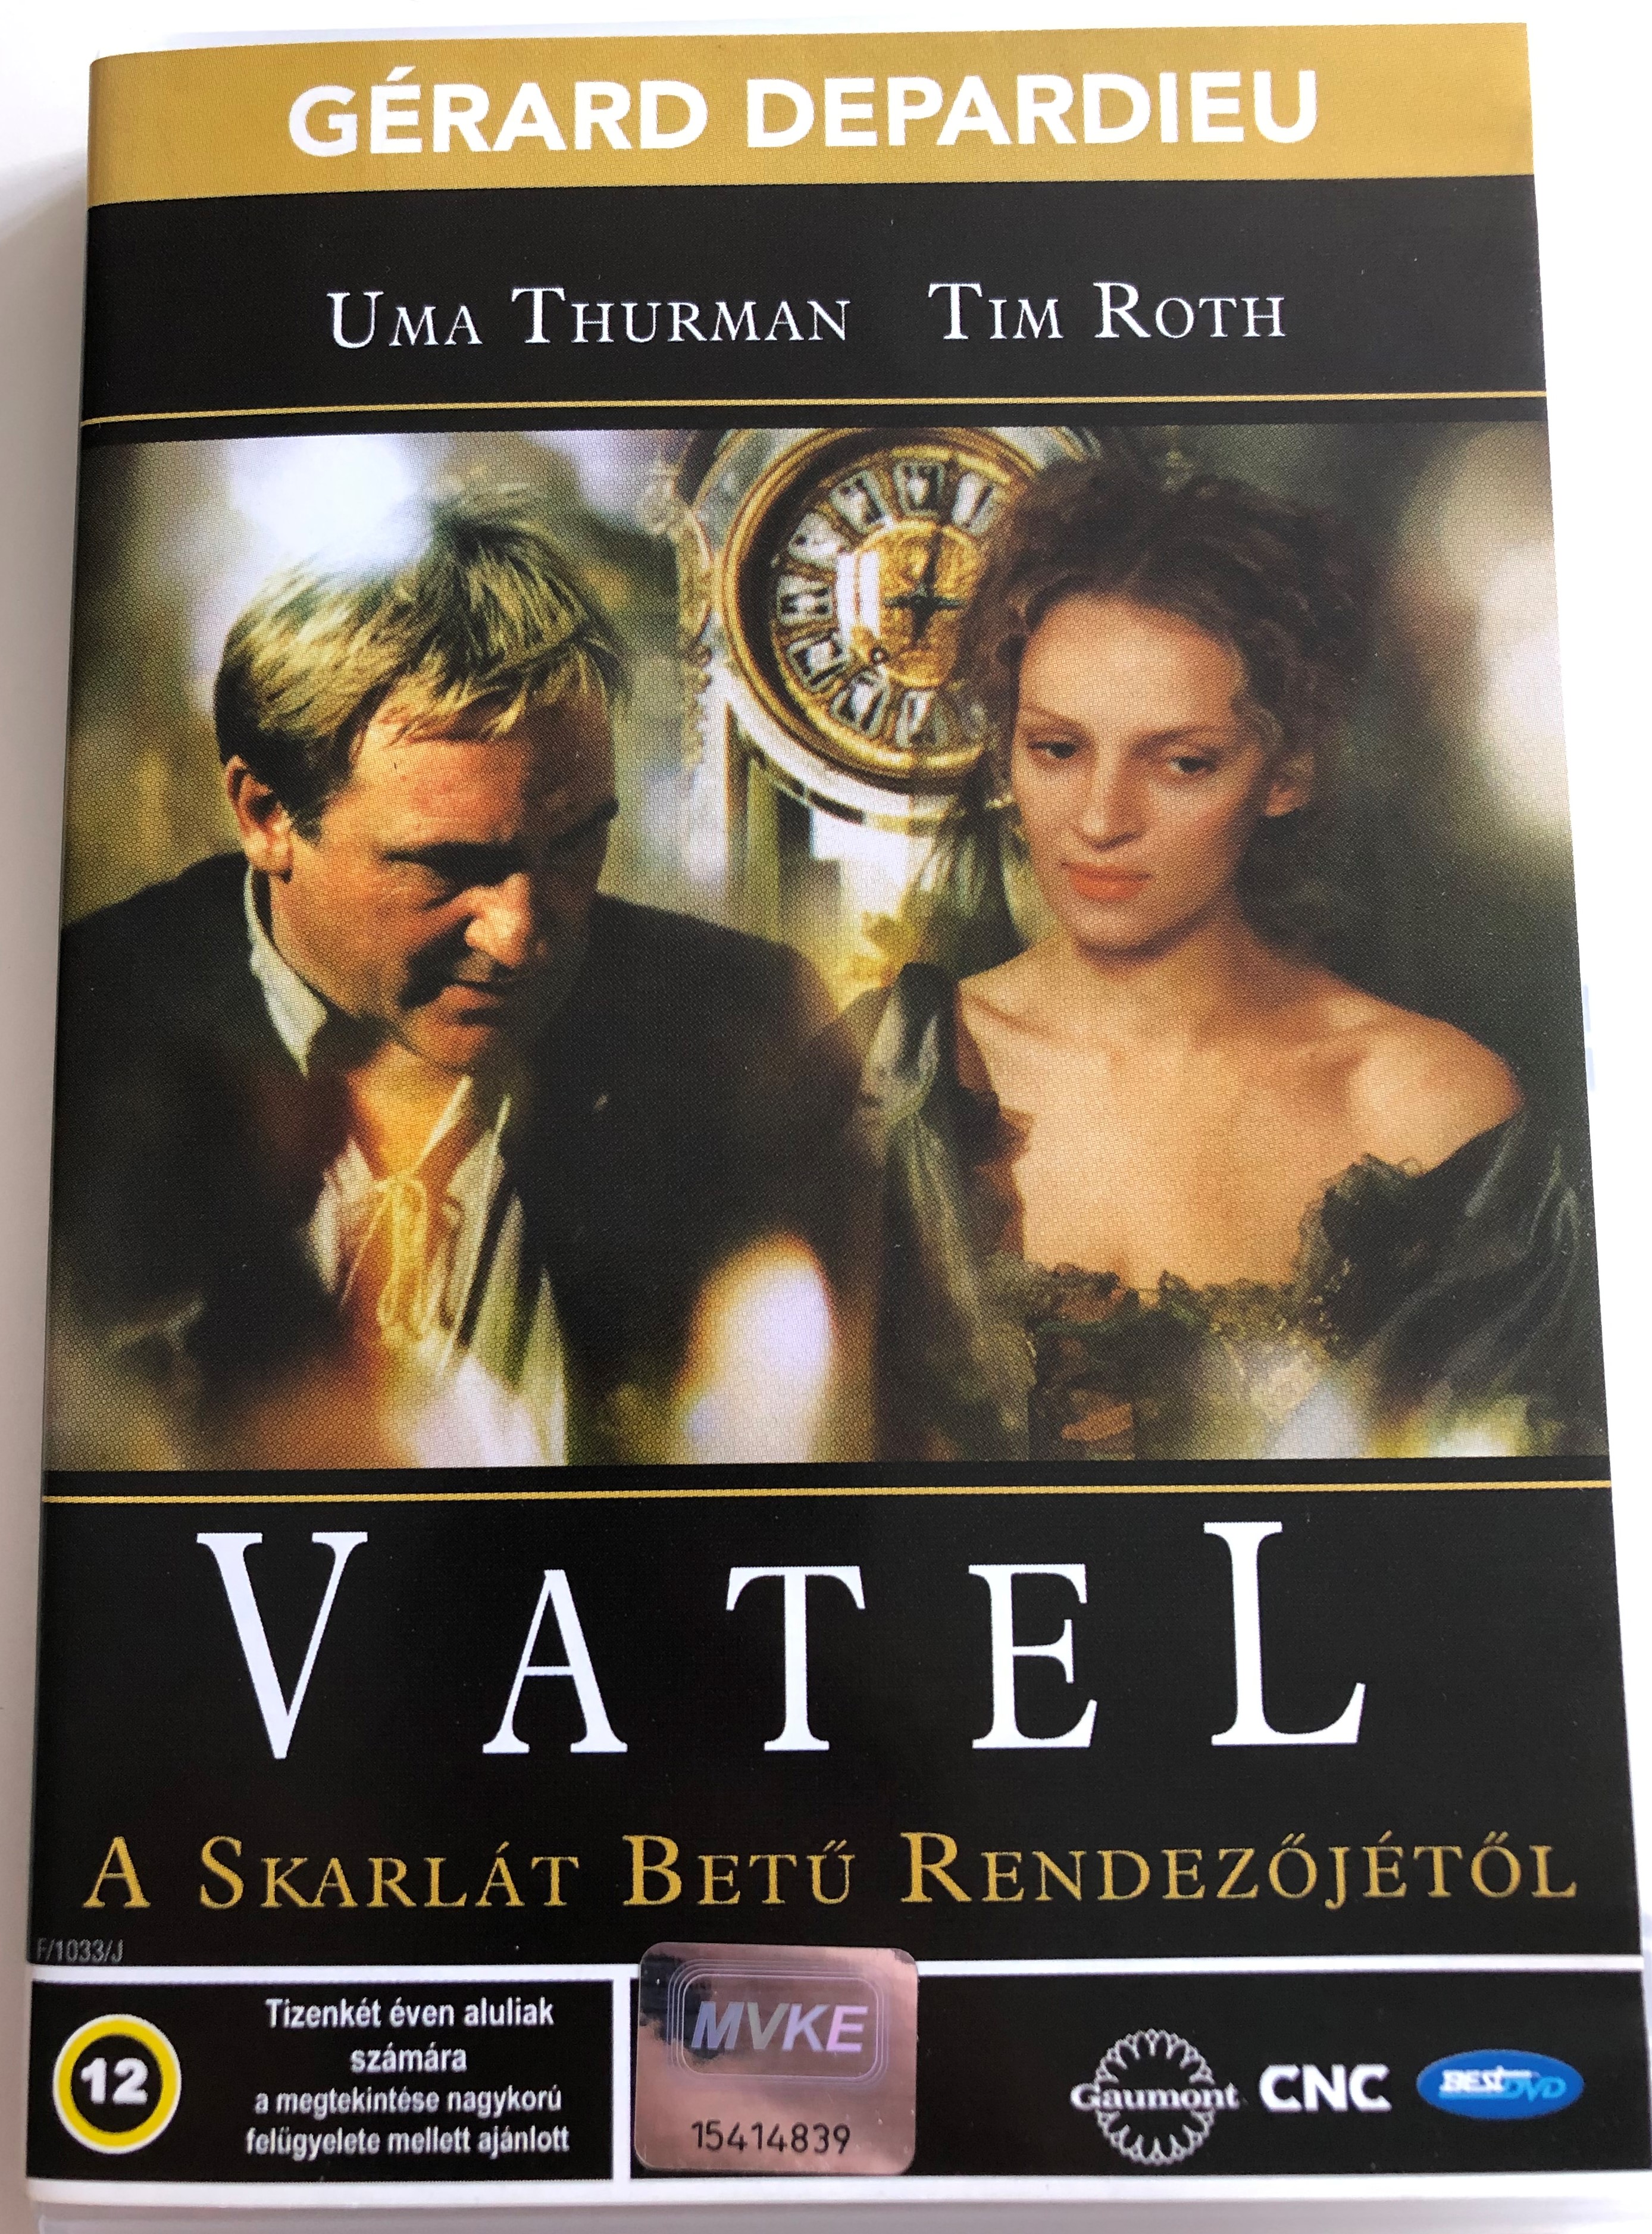 -vatel-dvd-2000-a-skarl-t-bet-rendez-j-t-l-directed-by-roland-joff-starring-g-rard-depardieu-uma-thurman-tim-roth-music-ennio-morricone-1-.jpg